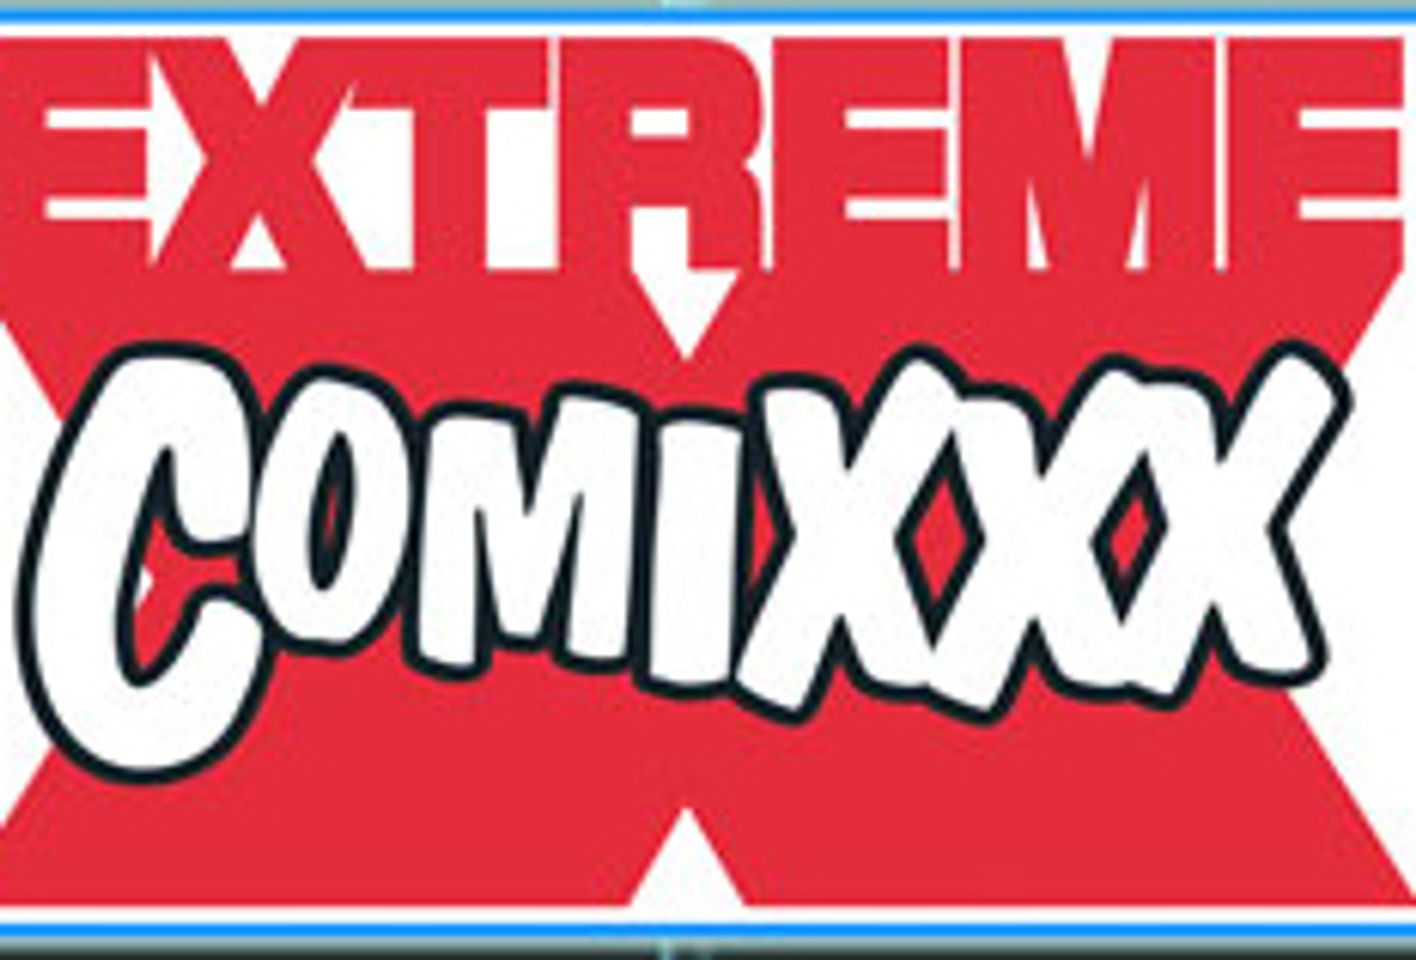 Exquisite Films & Extreme Comixxx Grab 6 NightMoves Noms